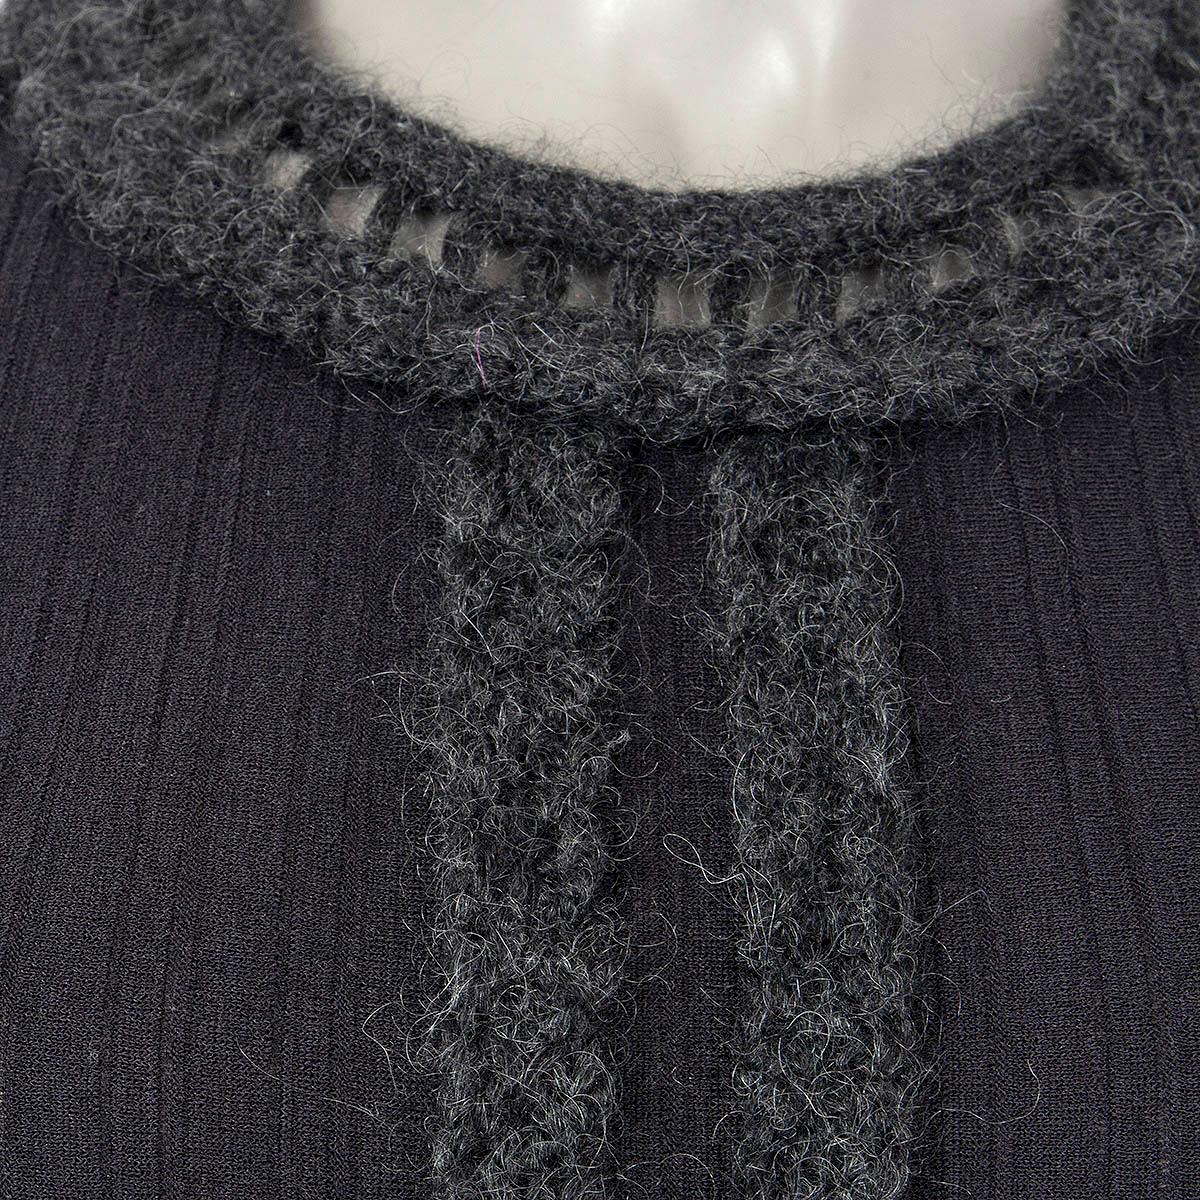 CHANEL charcoal grey wool 2010 CROCHET TRIM KNIT Dress 38 S 2